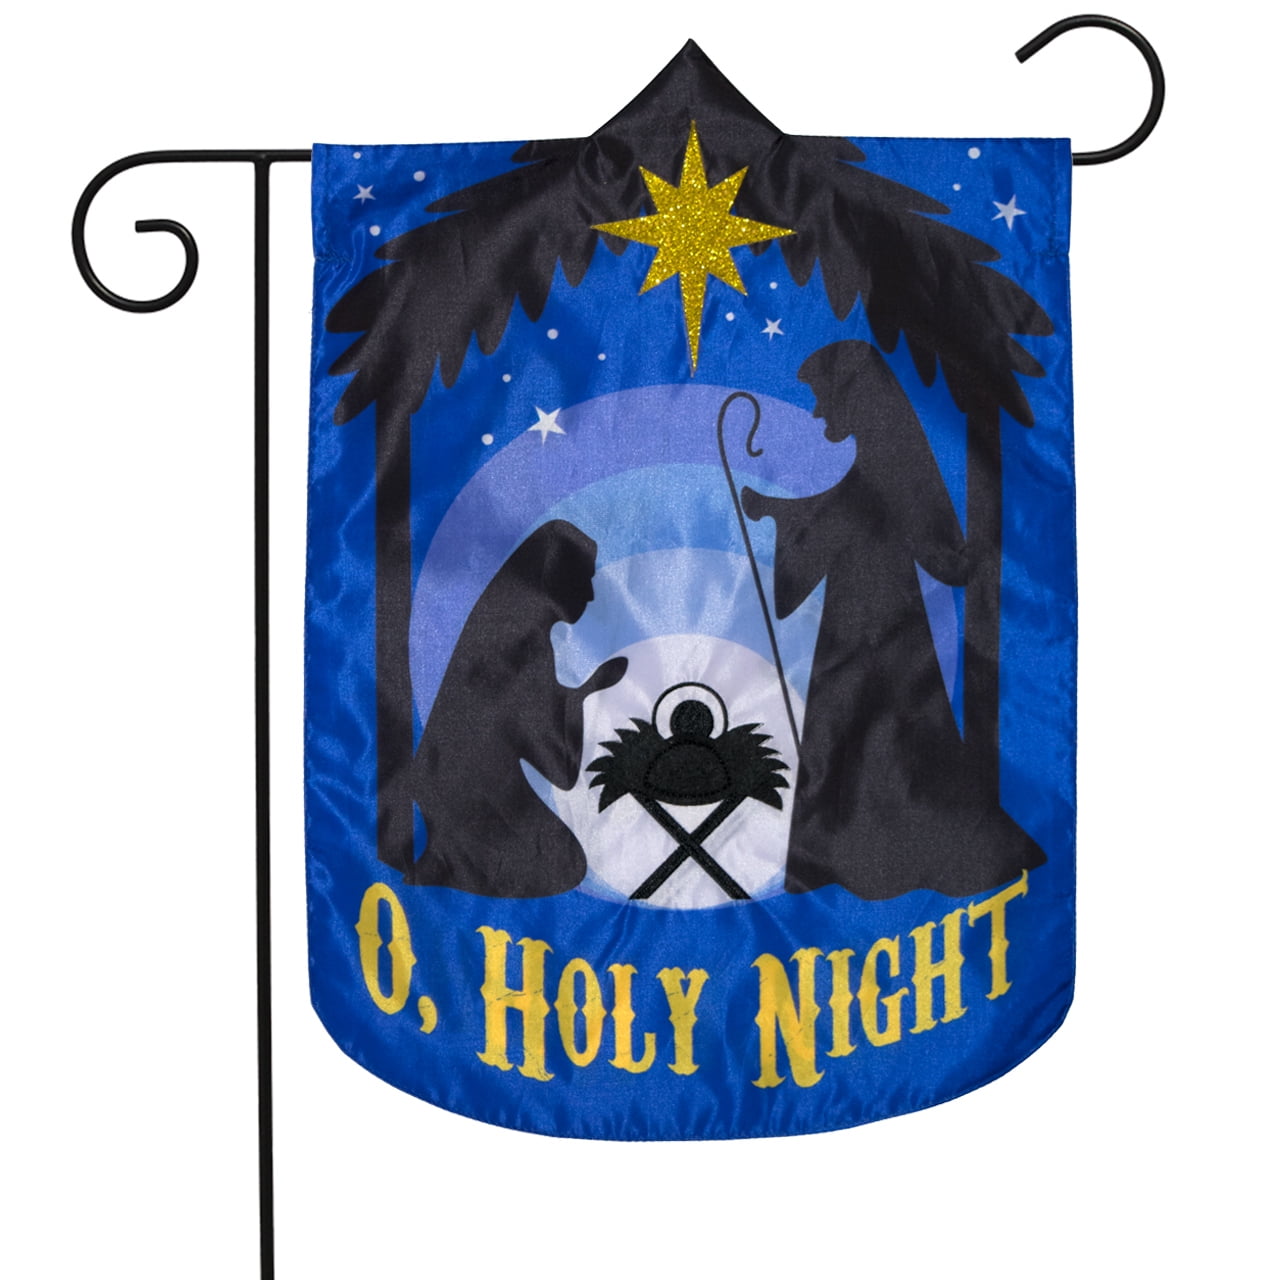 O Holy Night Christmas Applique Garden Flag Religious 12.5" x 18" Double Sided 